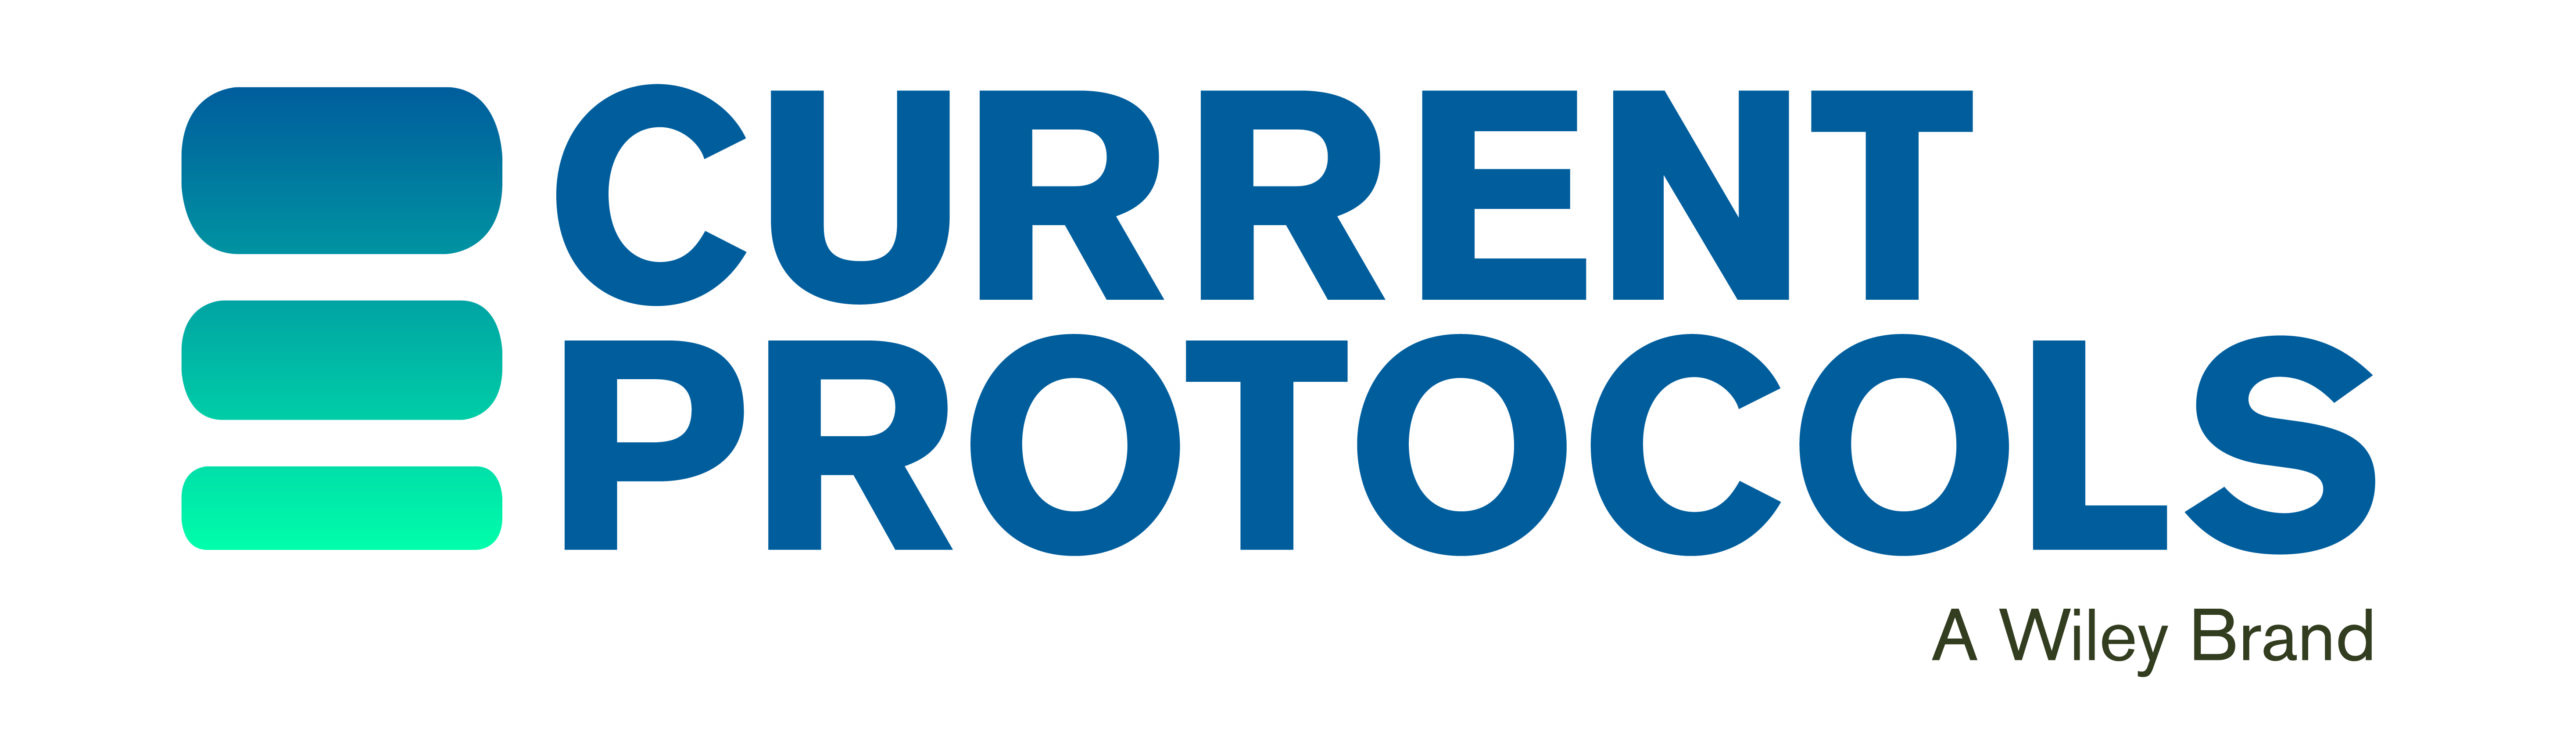 Current-Protocols-logo